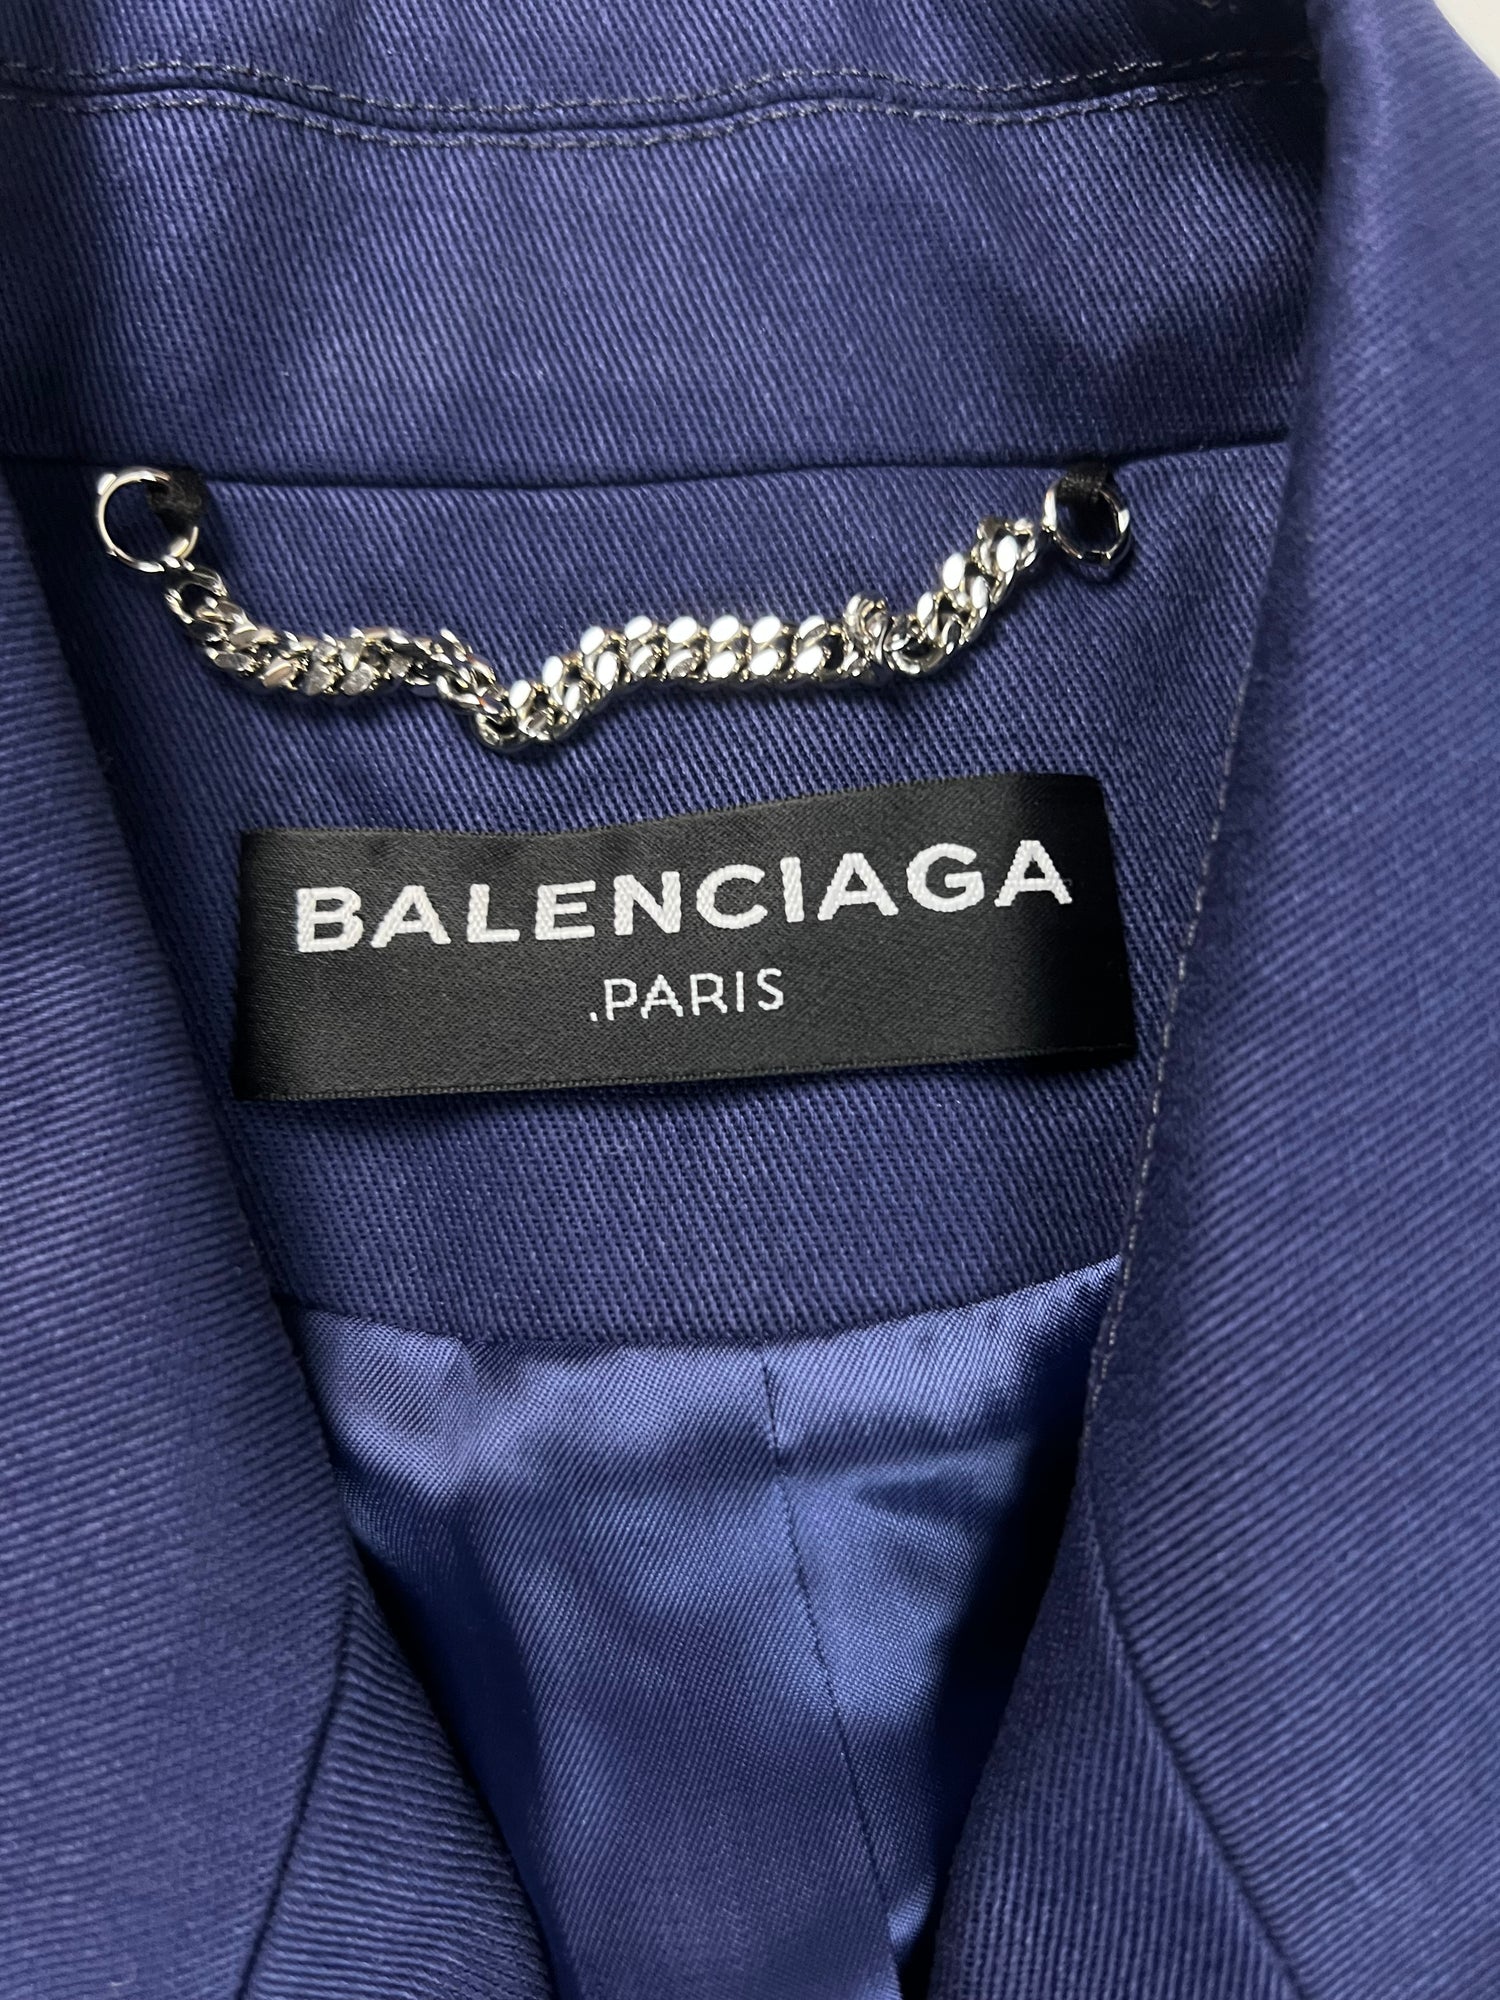 Balenciaga SS17 Runway cropped military officer Jacket with